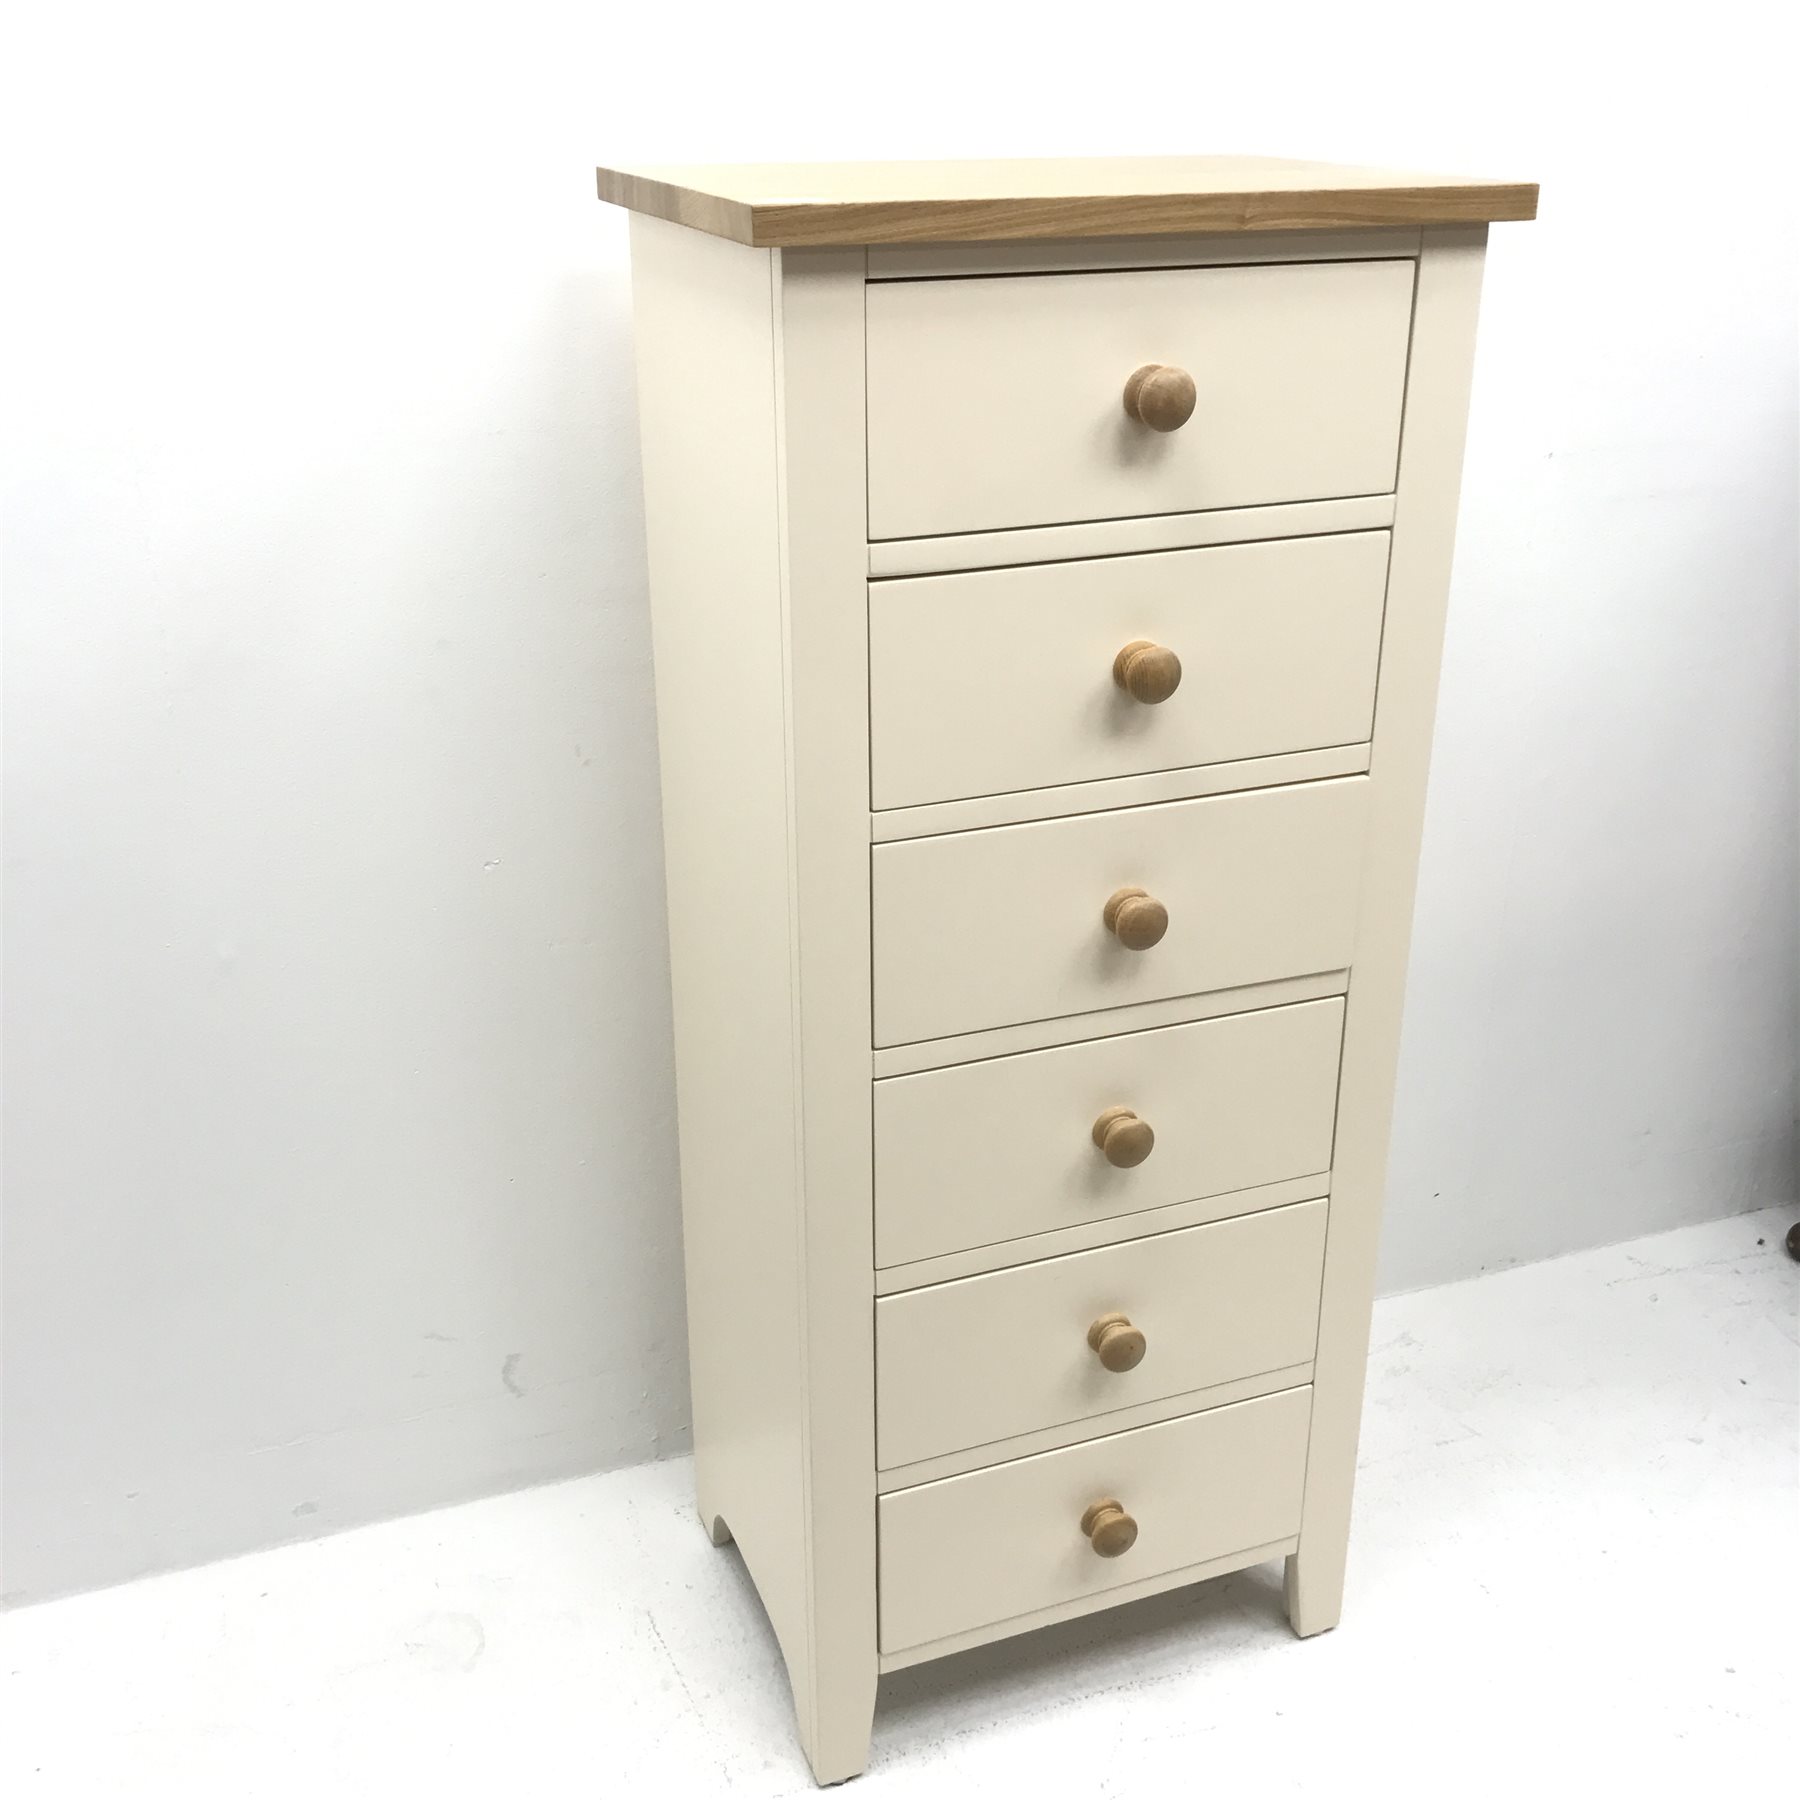 Tall oak and cream finish six drawer pedestal chest, W51cm, H117cm, D36cm